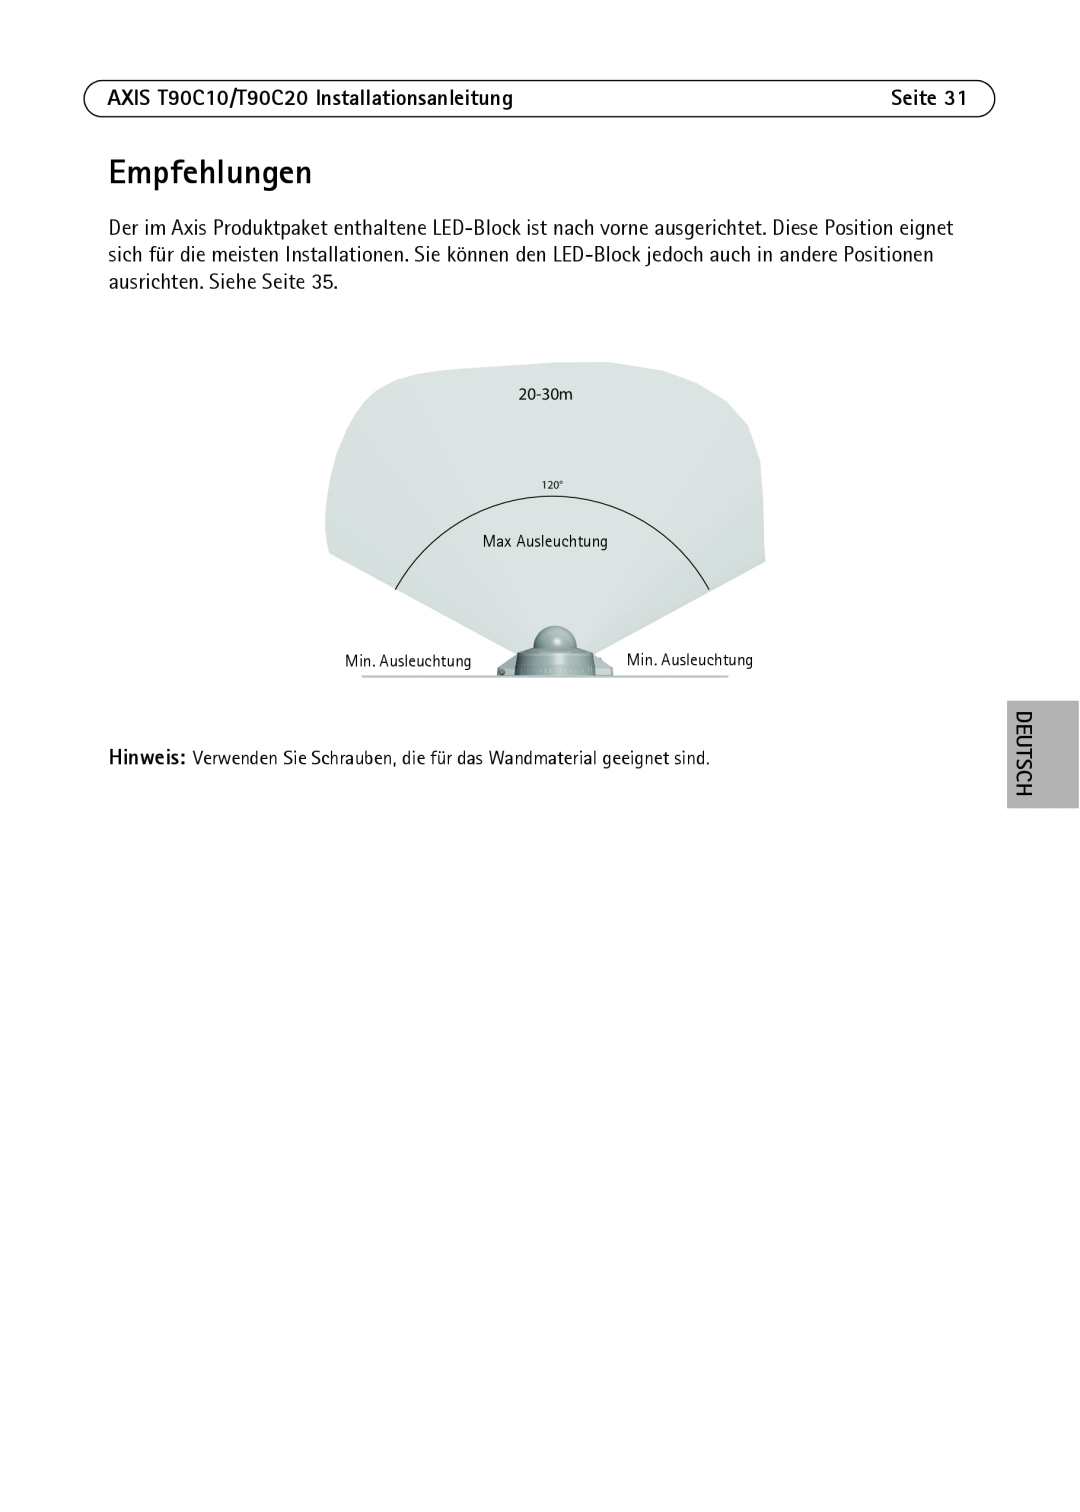 Axis Communications manual Empfehlungen, AXIS T90C10/T90C20 Installationsanleitung, Deutsch, 20-30m, Max Ausleuchtung 